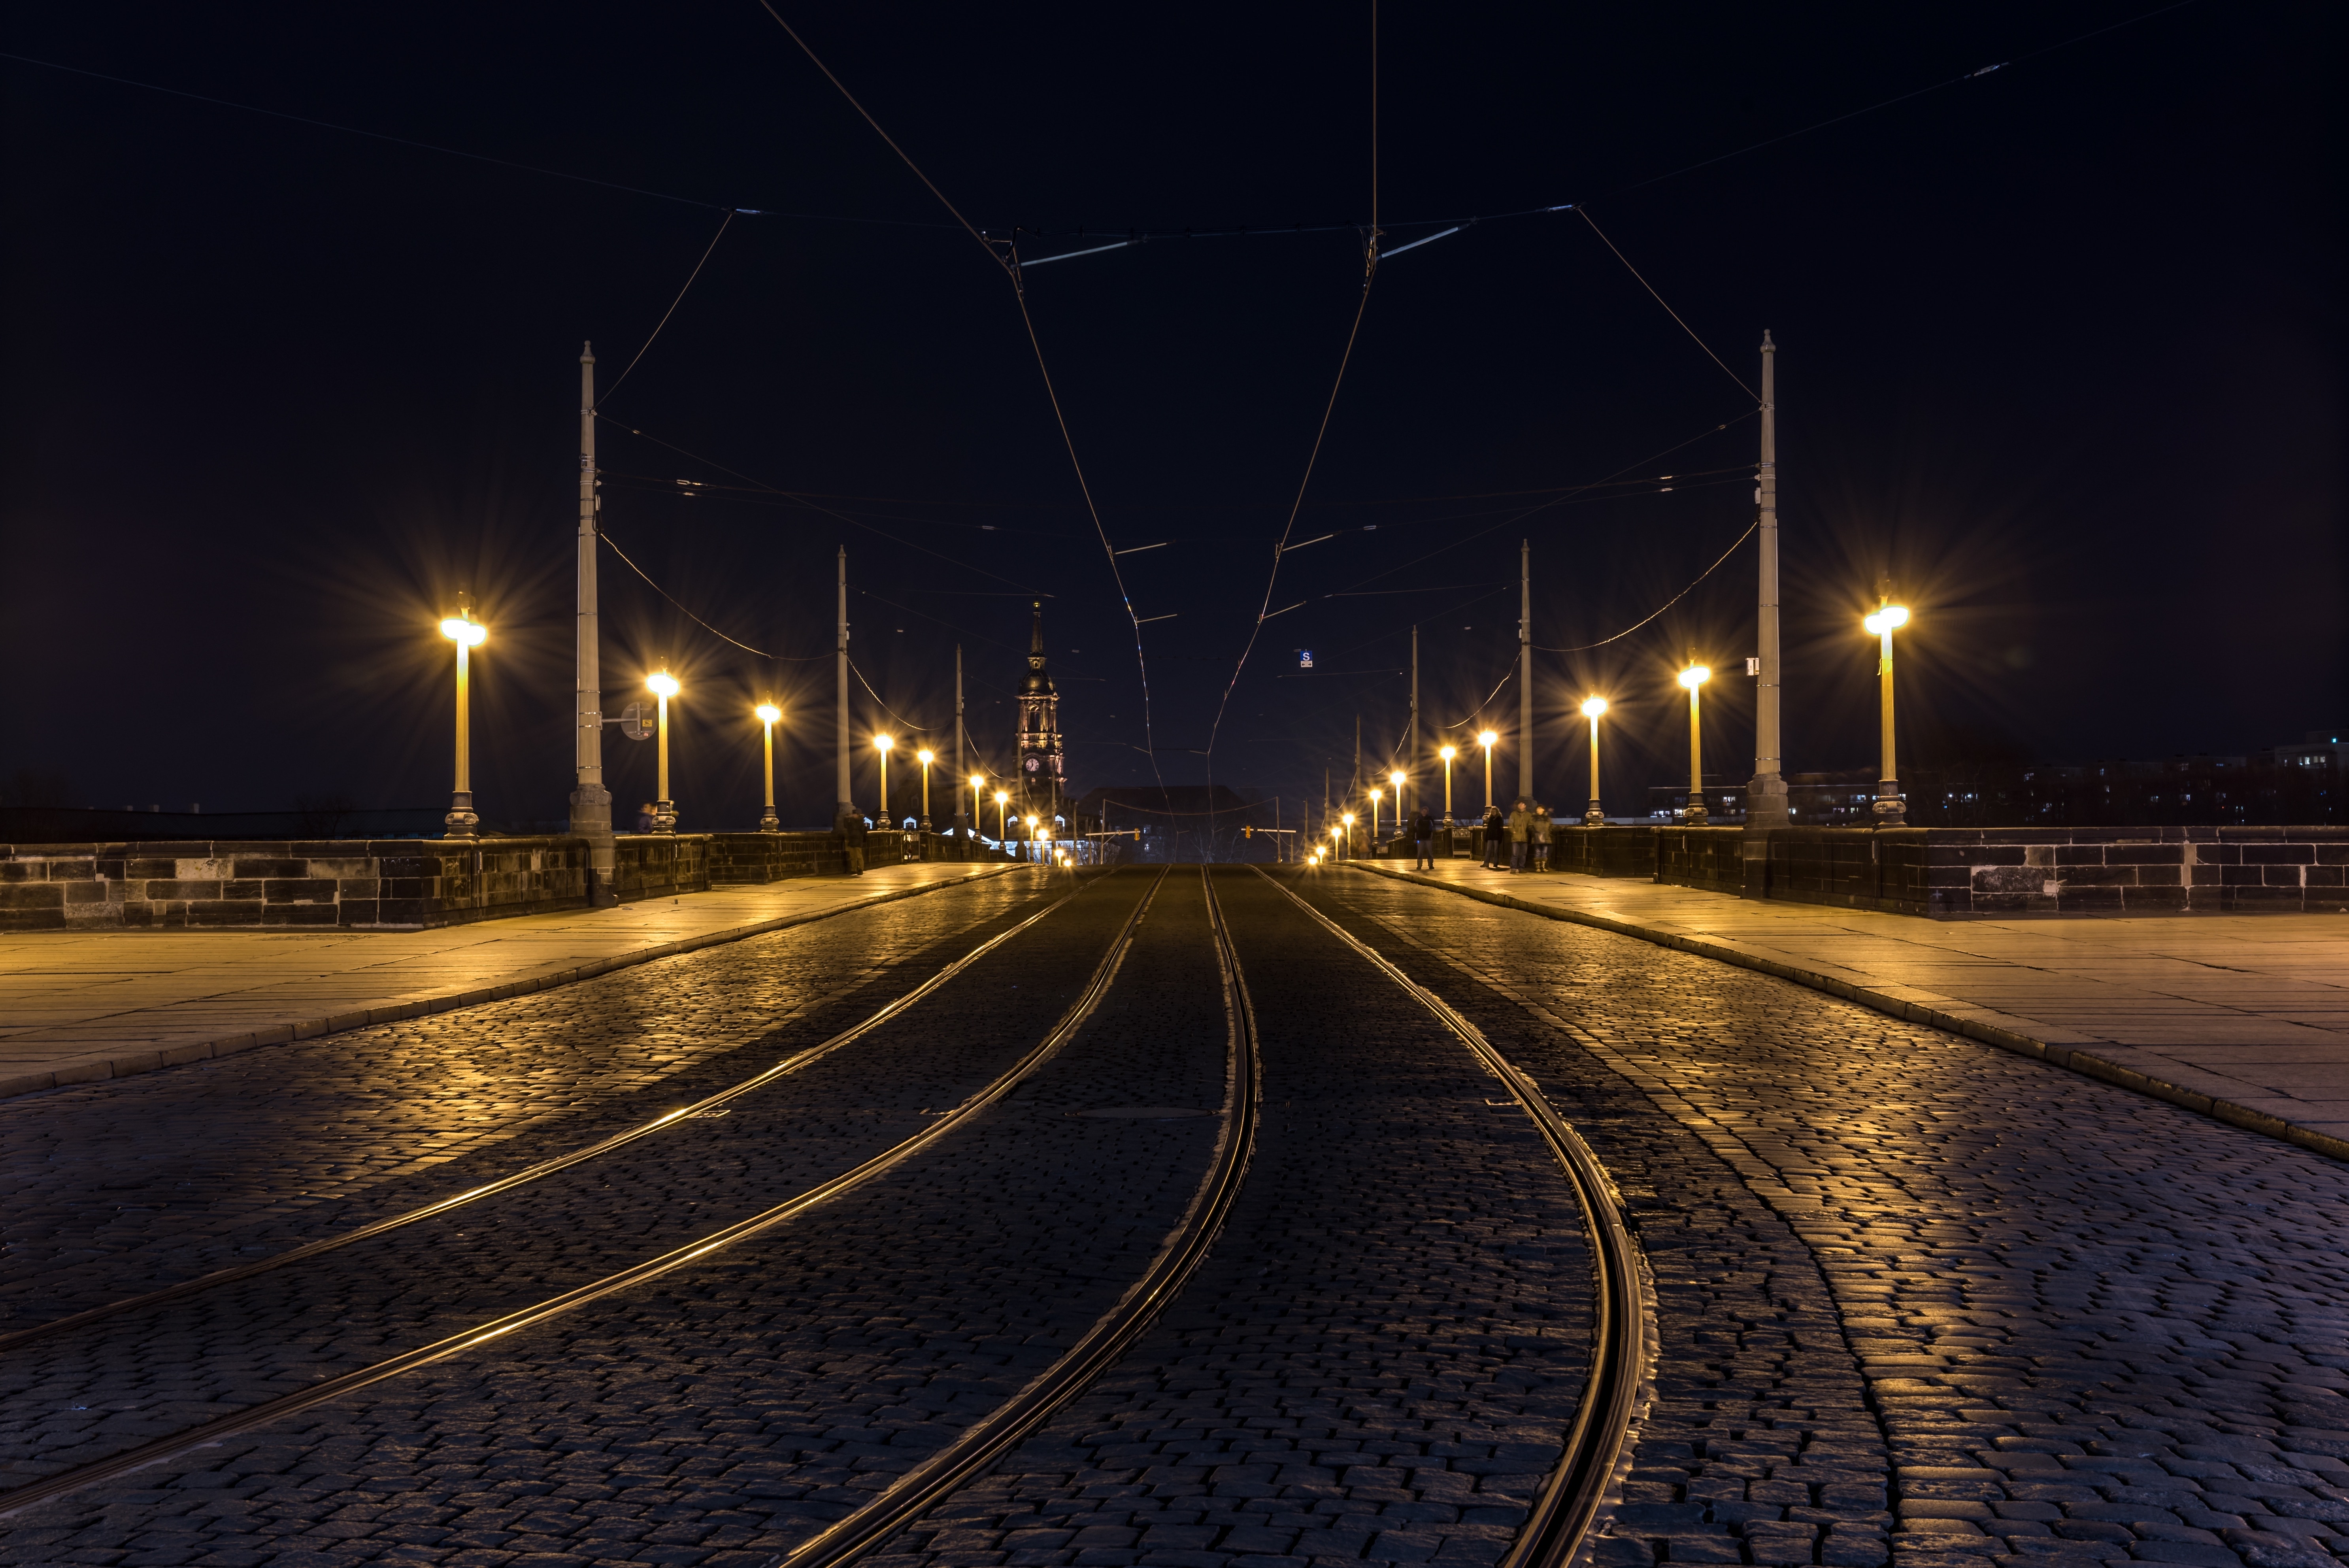 lowlight, dark, night, light, night, railroad track